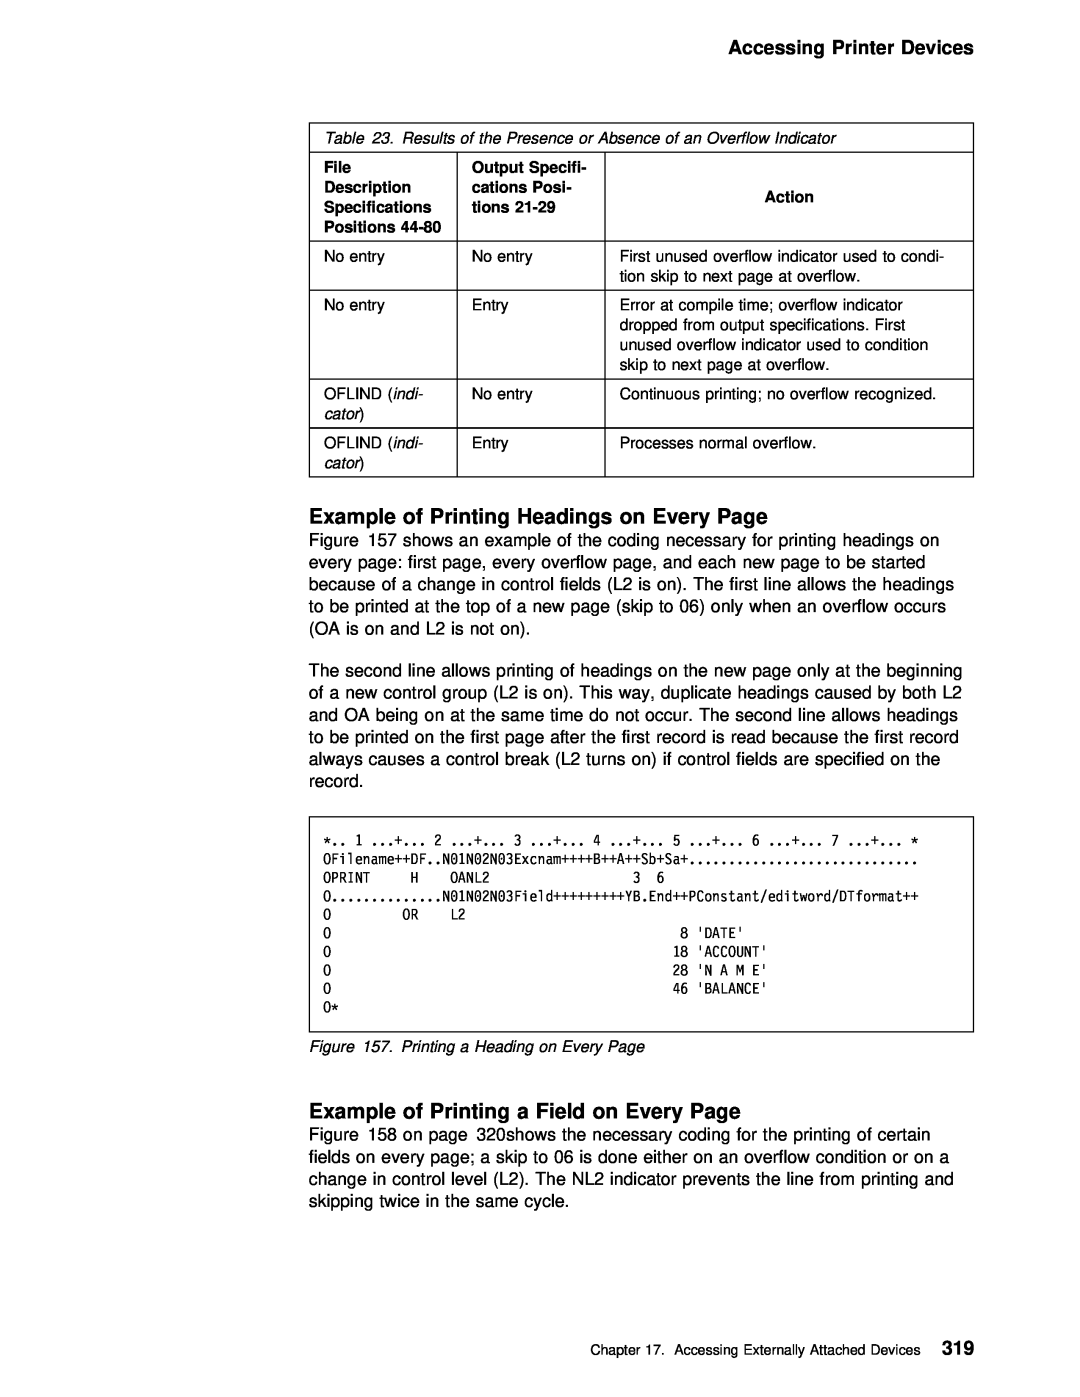 IBM AS/400 manual Example of Printing Headings on Every Page, Example of Printing a Field on Every Page 